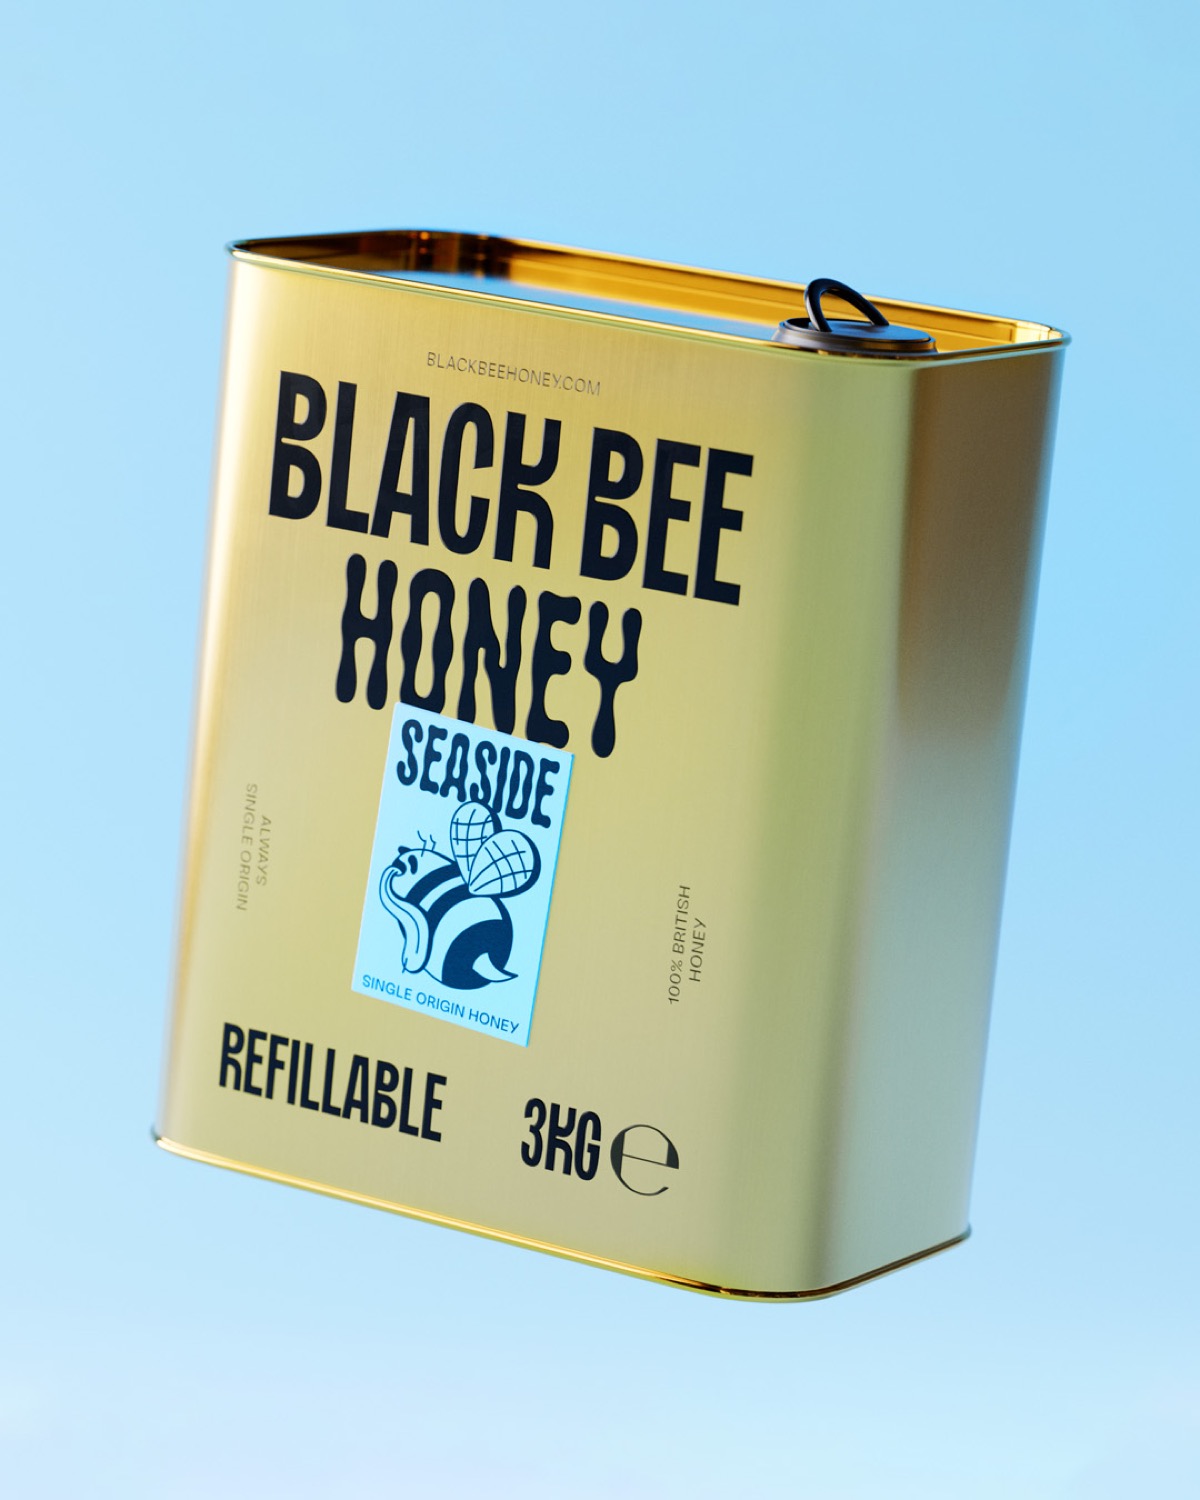 Black Bee Honey蜂蜜包裝設計